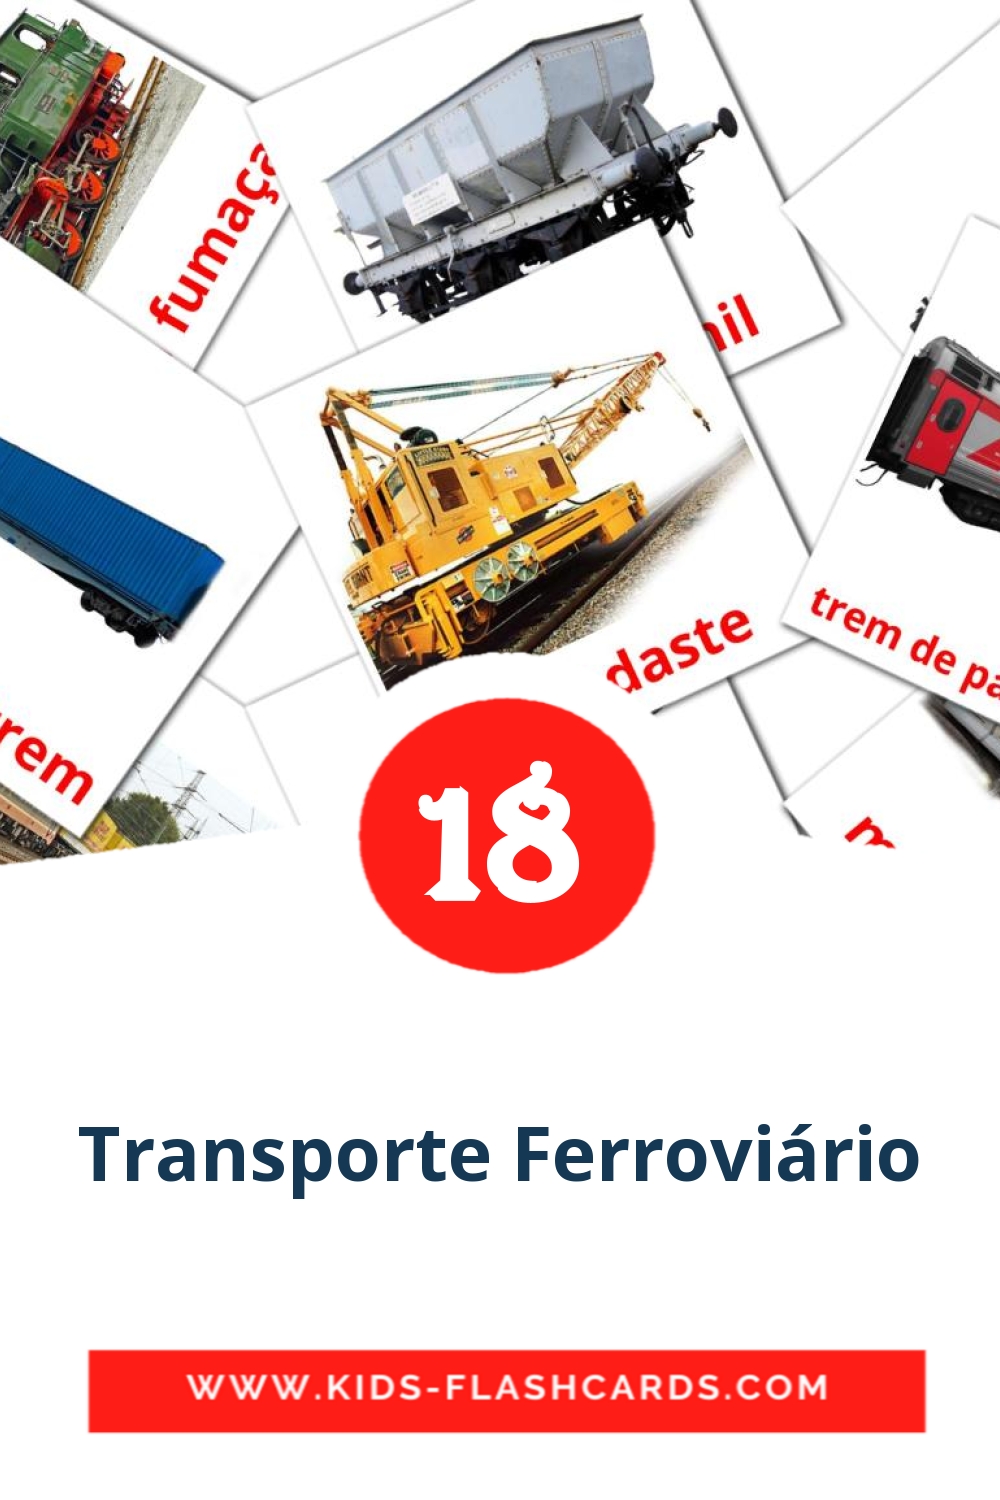 18 Transporte Ferroviário Picture Cards for Kindergarden in portuguese